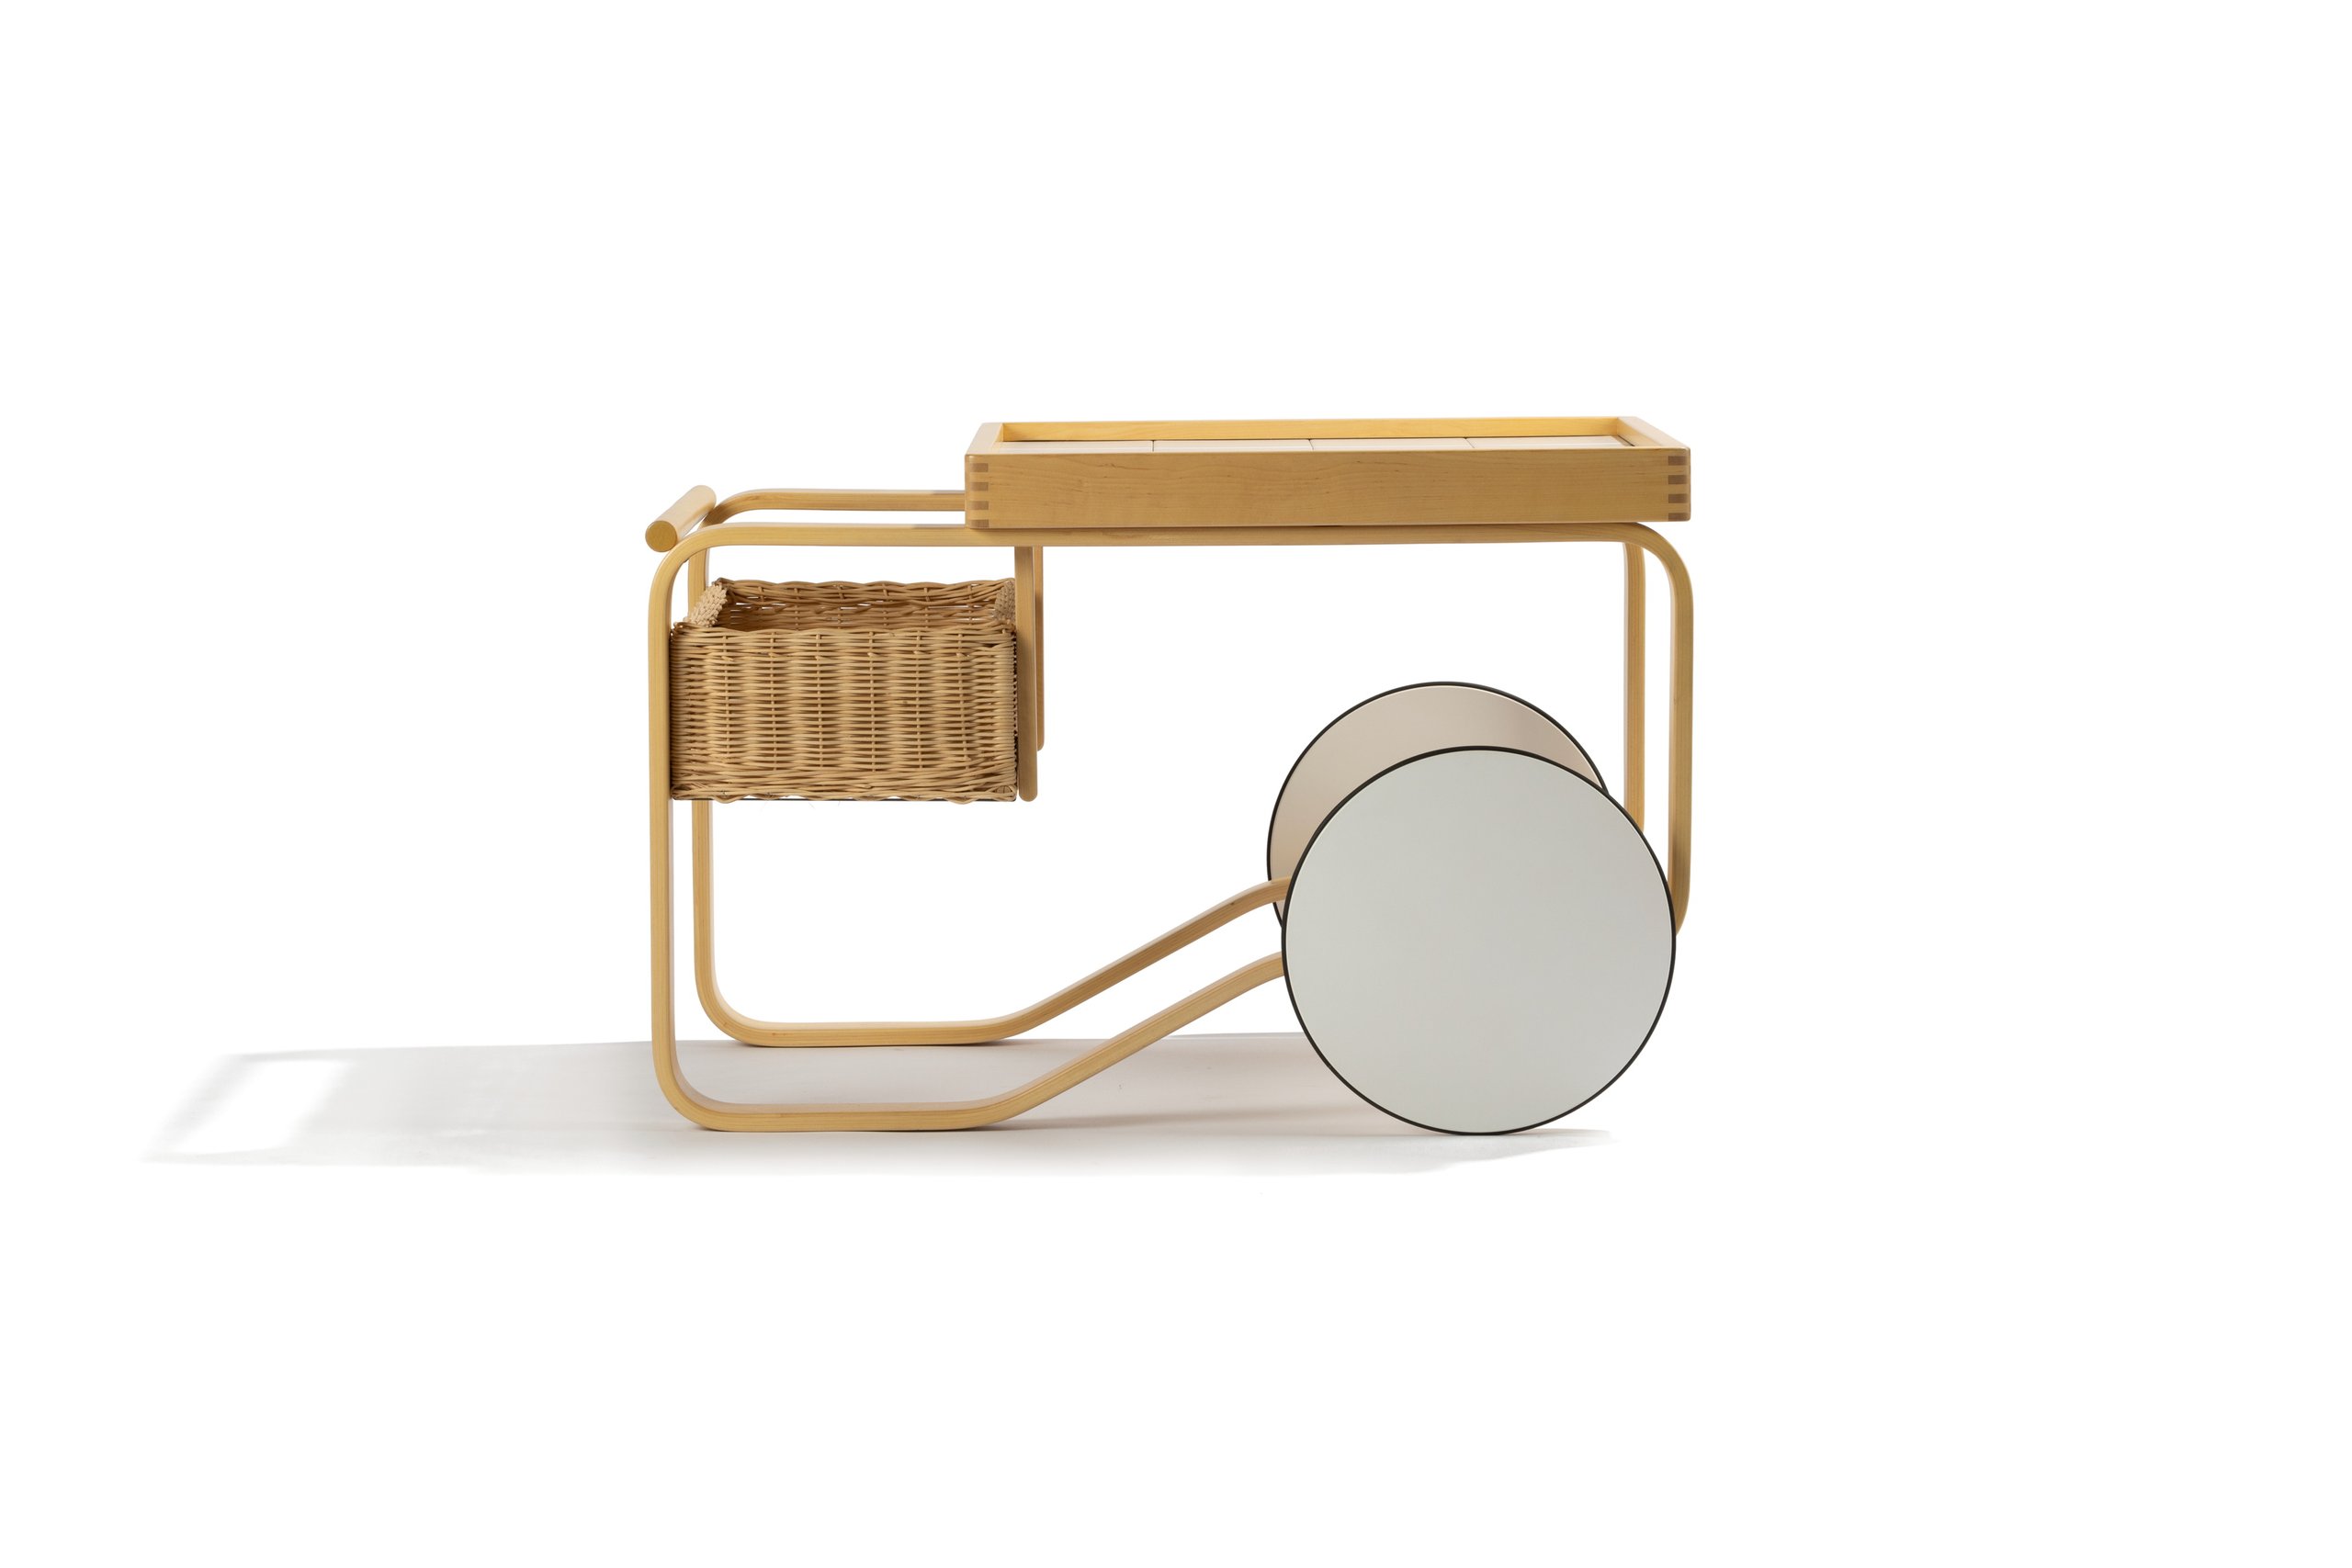 900' tea trolley designed by Alvar Aalto